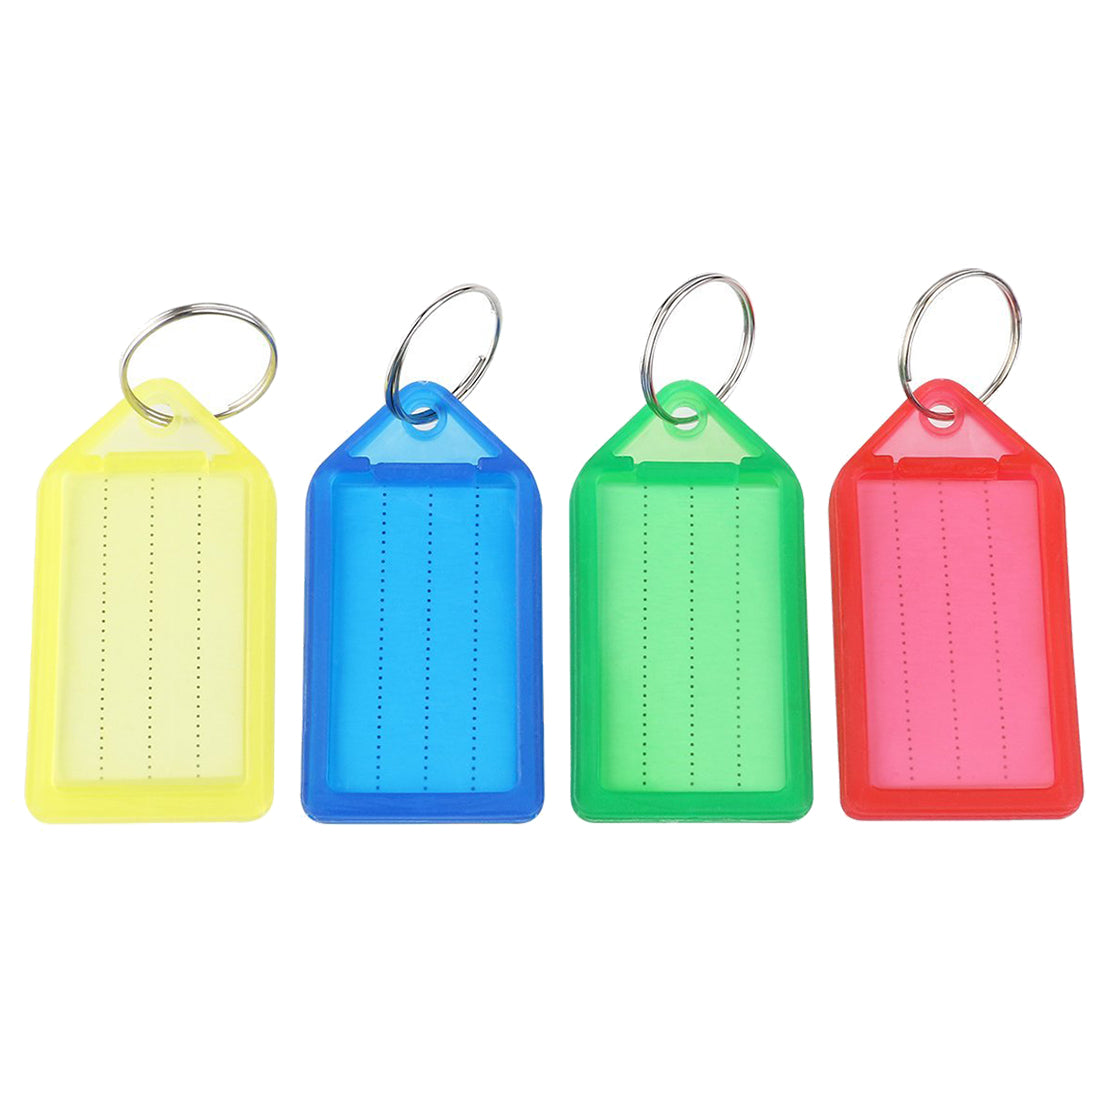 60pcs plastic Slideable Key Fobs Luggage Tags with Key Rings Random Color - ebowsos